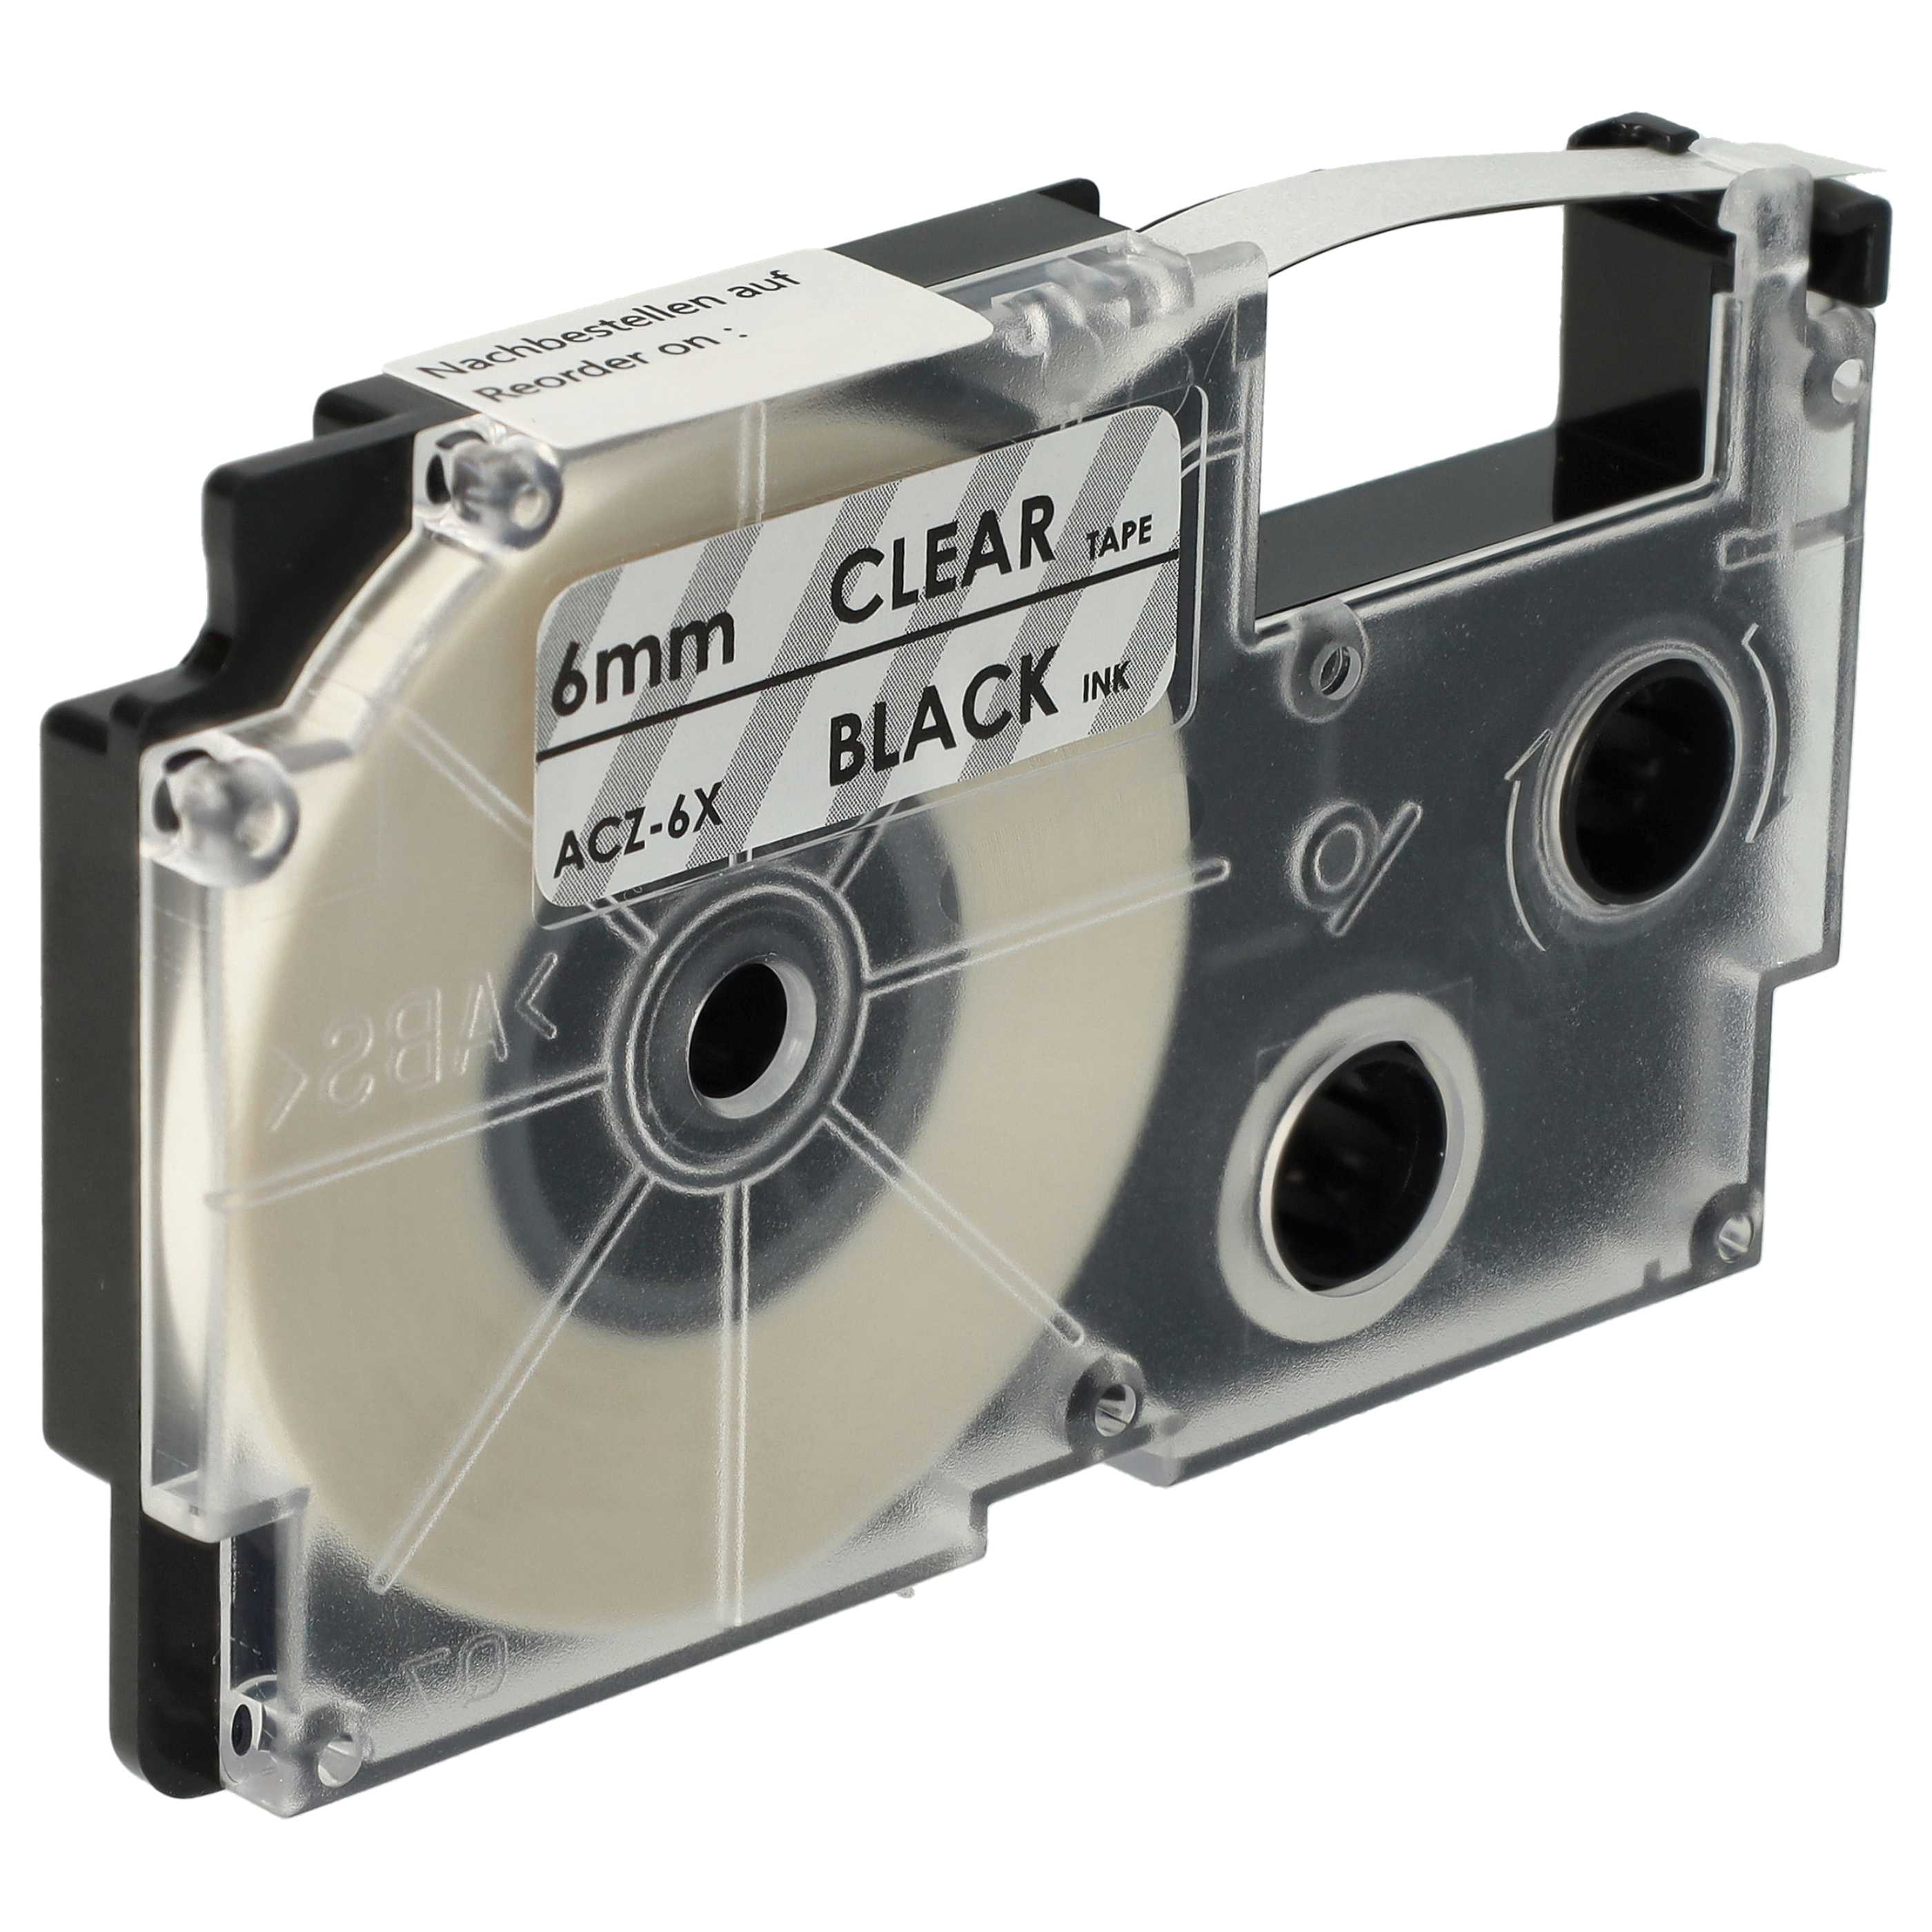 Cassetta nastro sostituisce Casio XR-6X1, XR-6X per etichettatrice Casio 6mm nero su trasparente